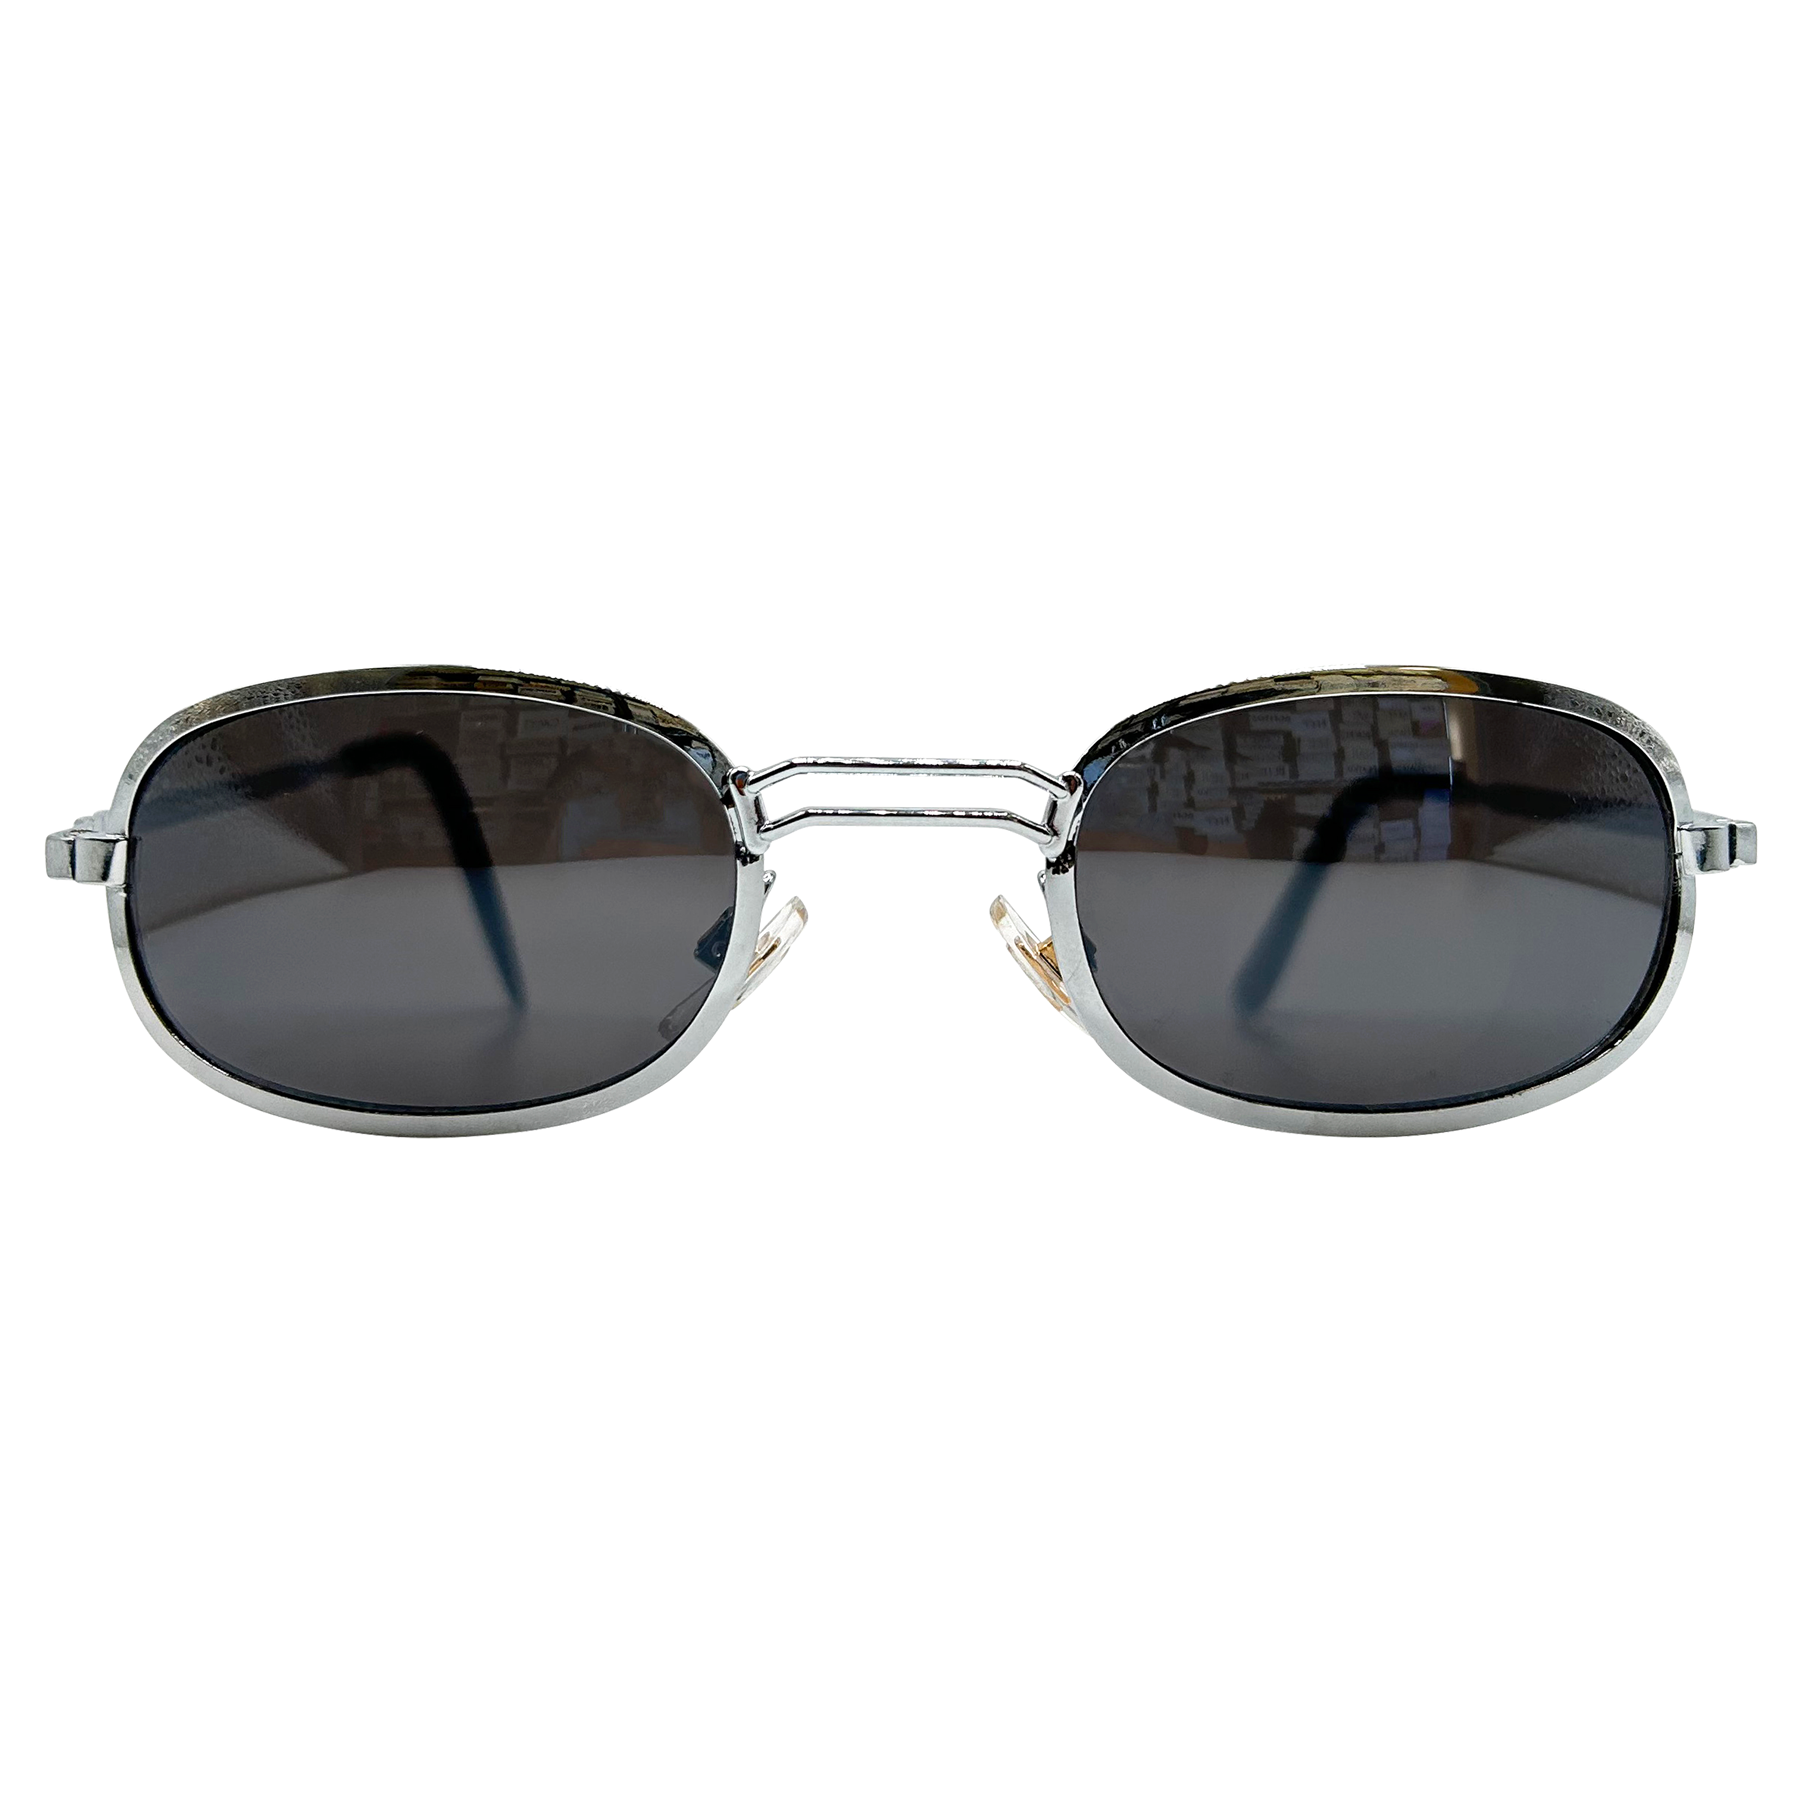 FAIRFAX Round Sunglasses